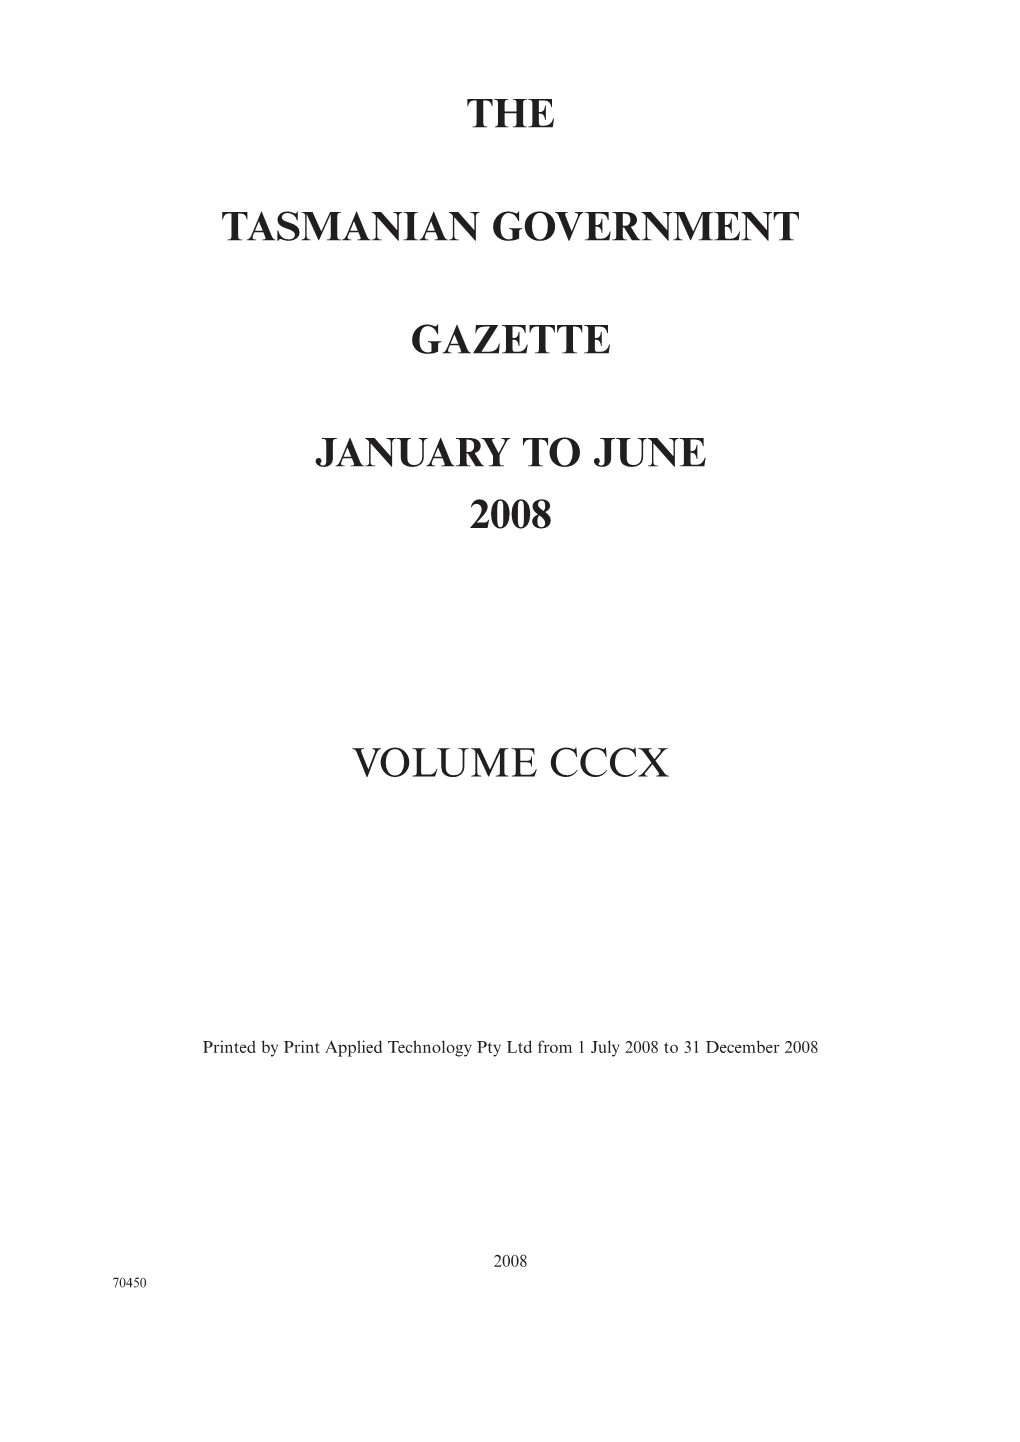 The Tasmanian Government Gazette January to June